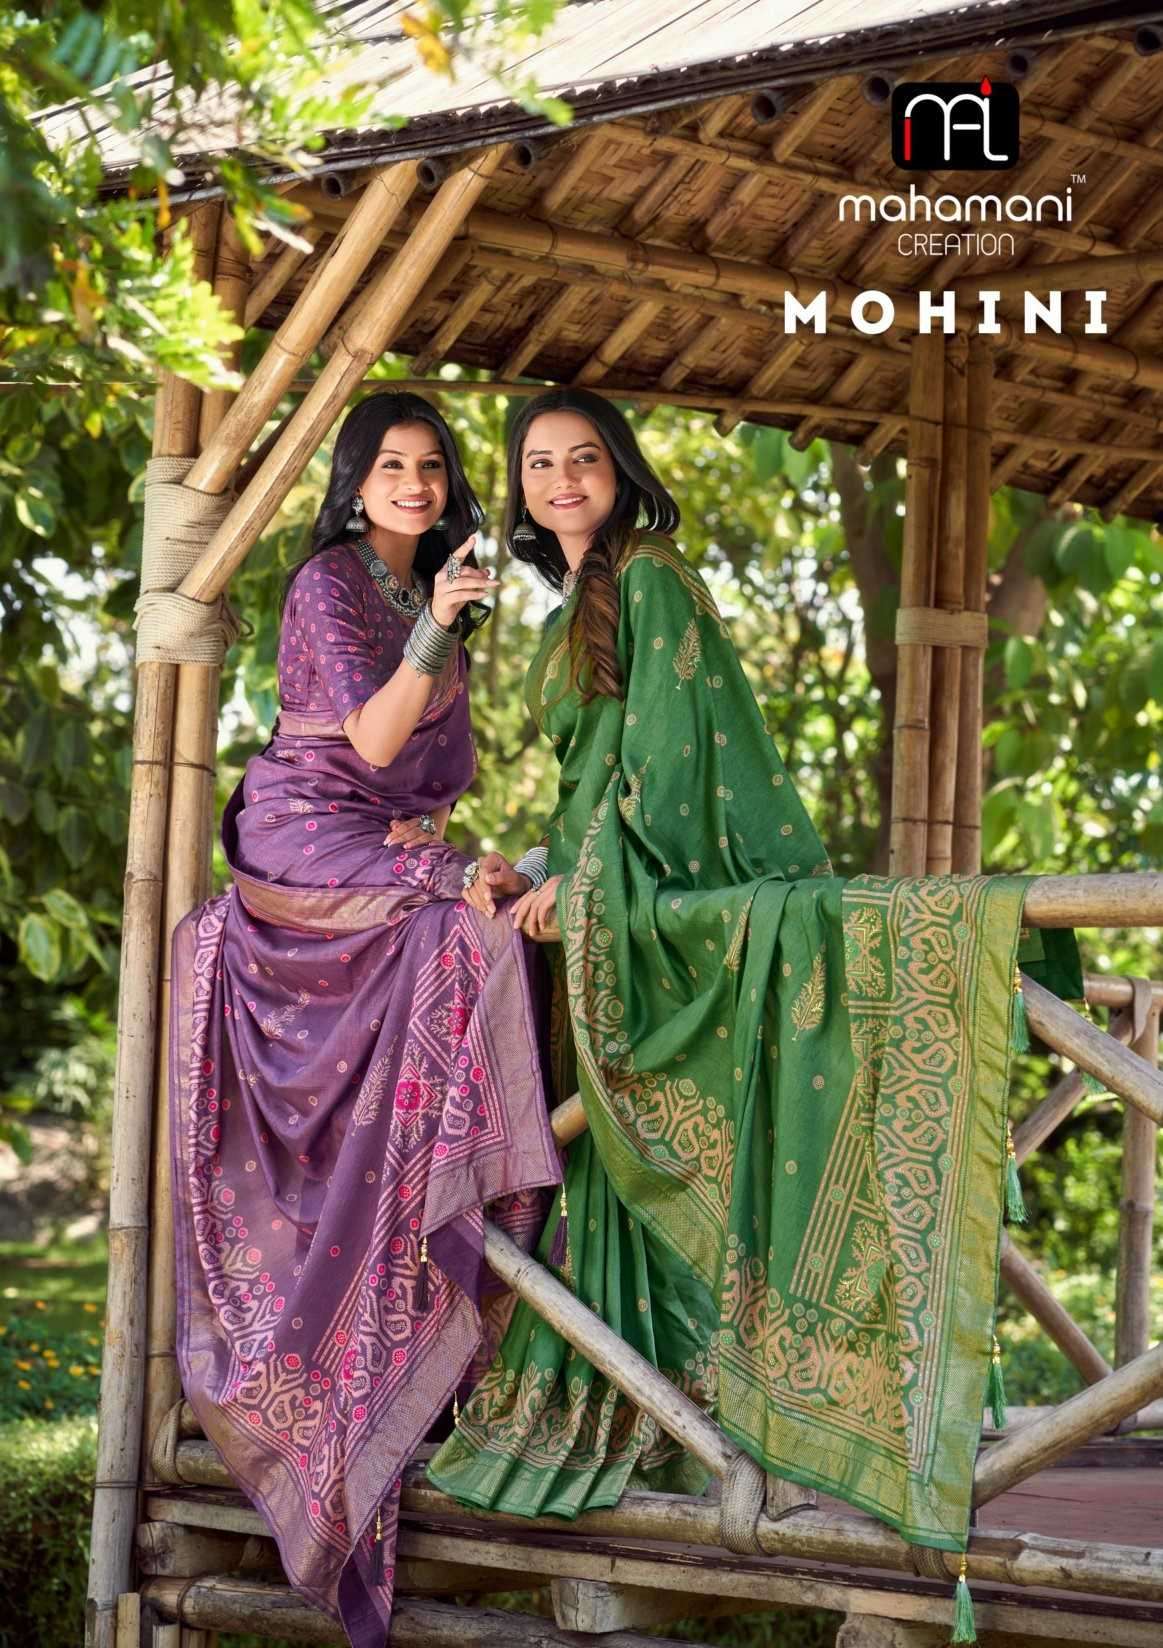 mahamani creation mohini series 100-1012 tussar dola silk saree